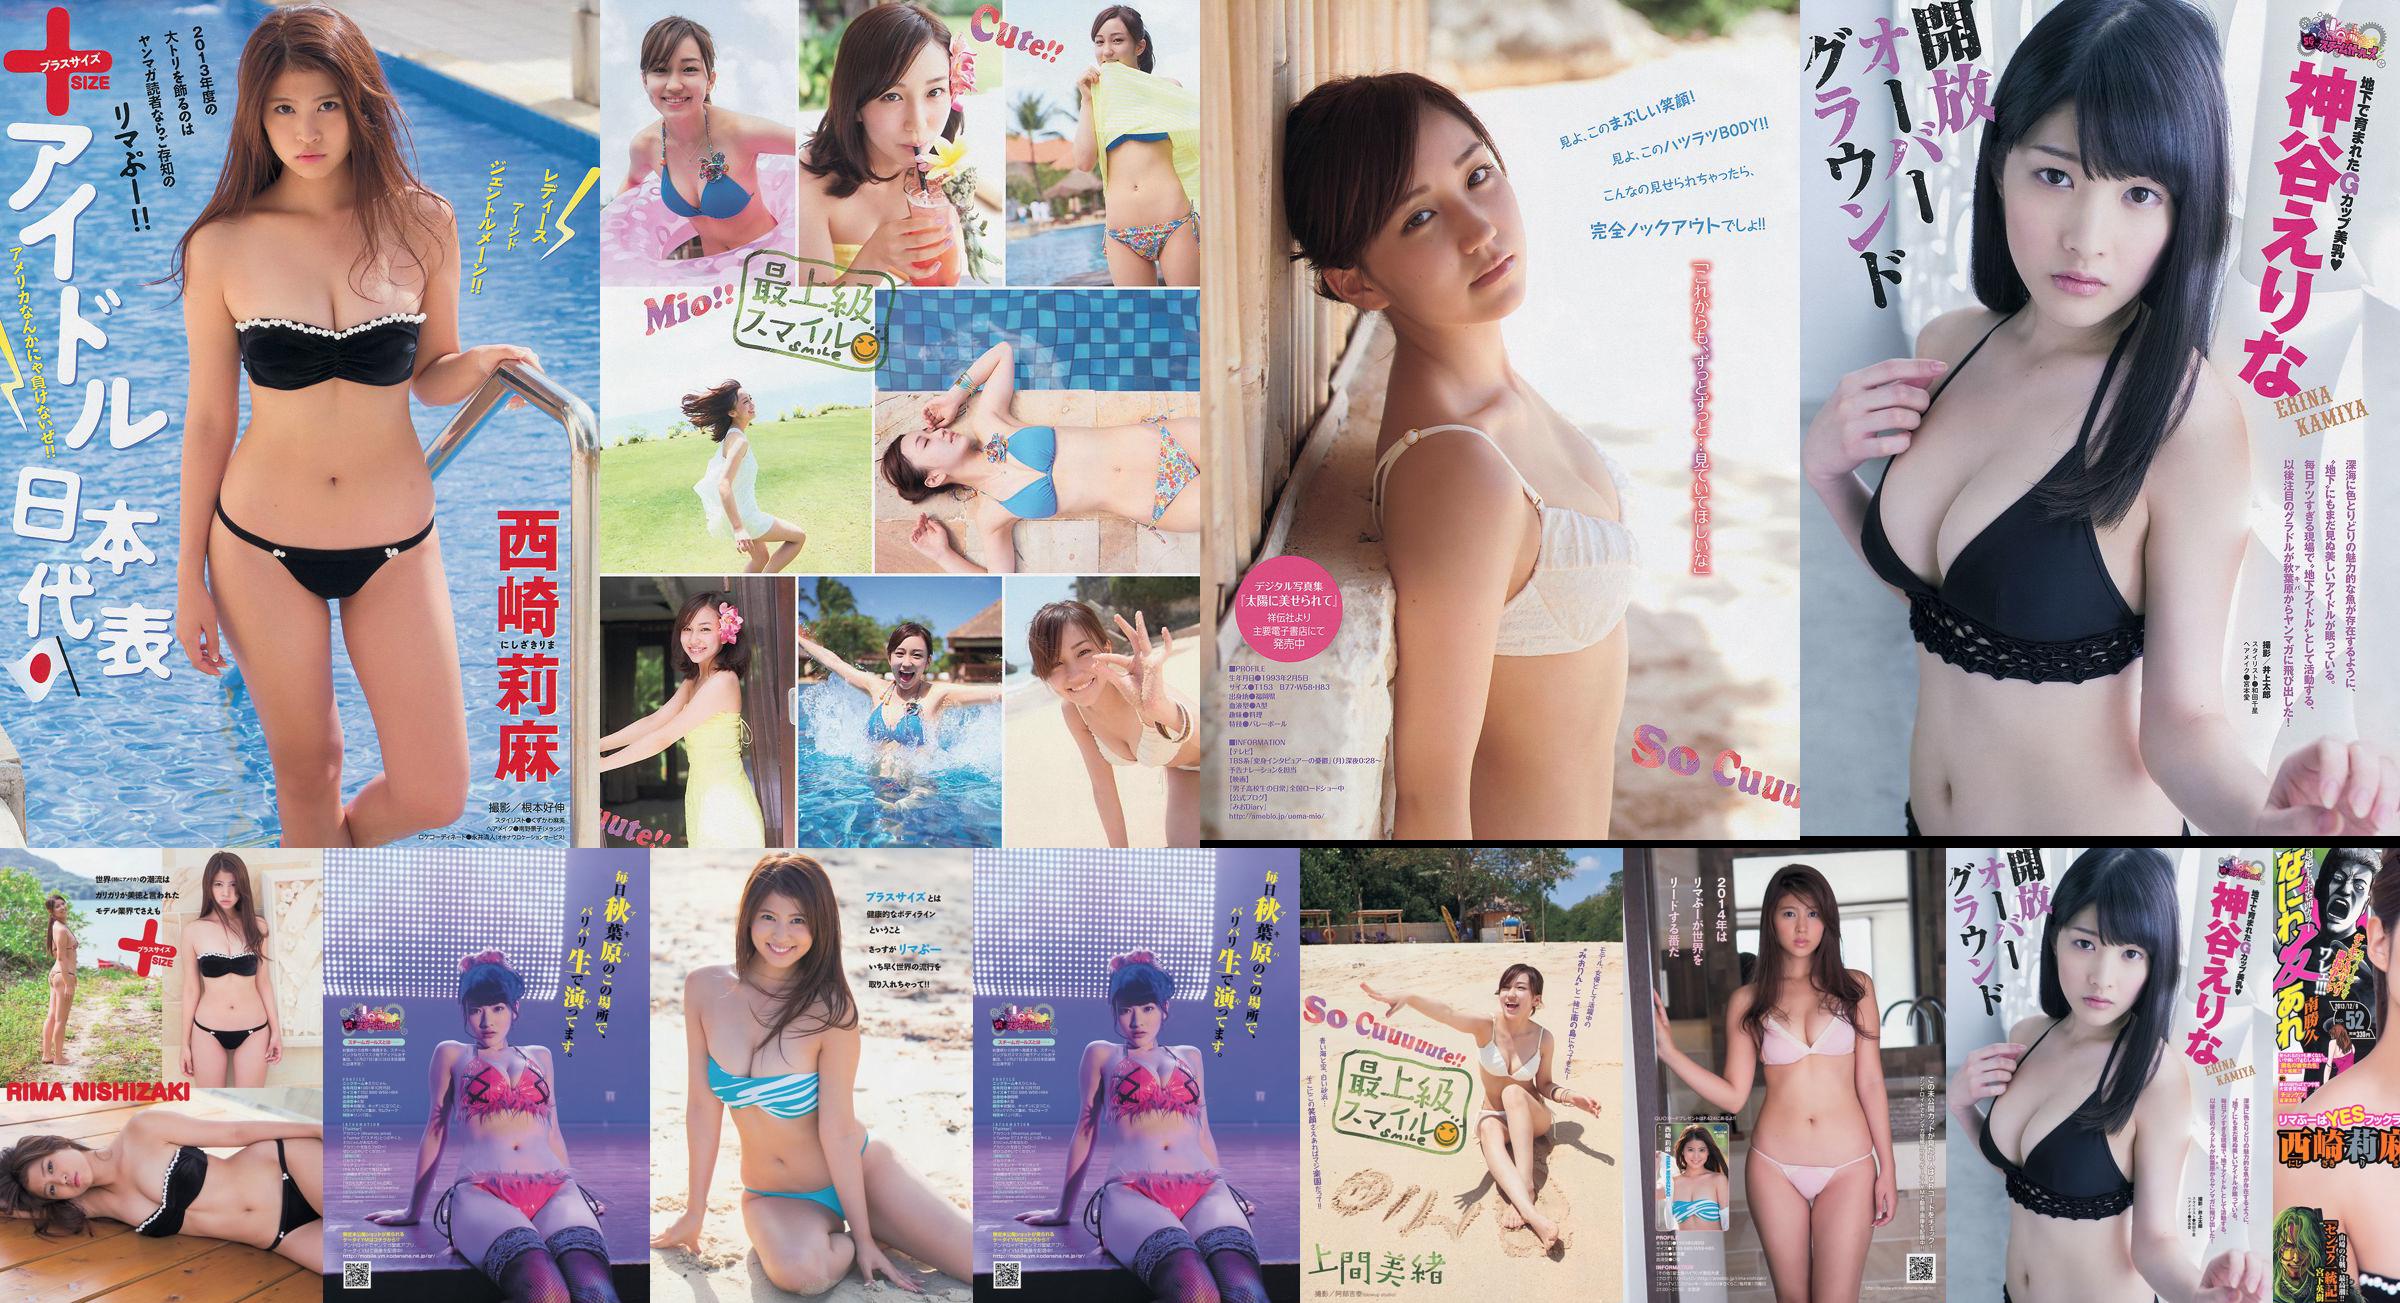 [Young Magazine] Rima Nishizaki Mio Uema Erina Kamiya 2013 No.52 Photo Moshi No.67ae0d Page 1